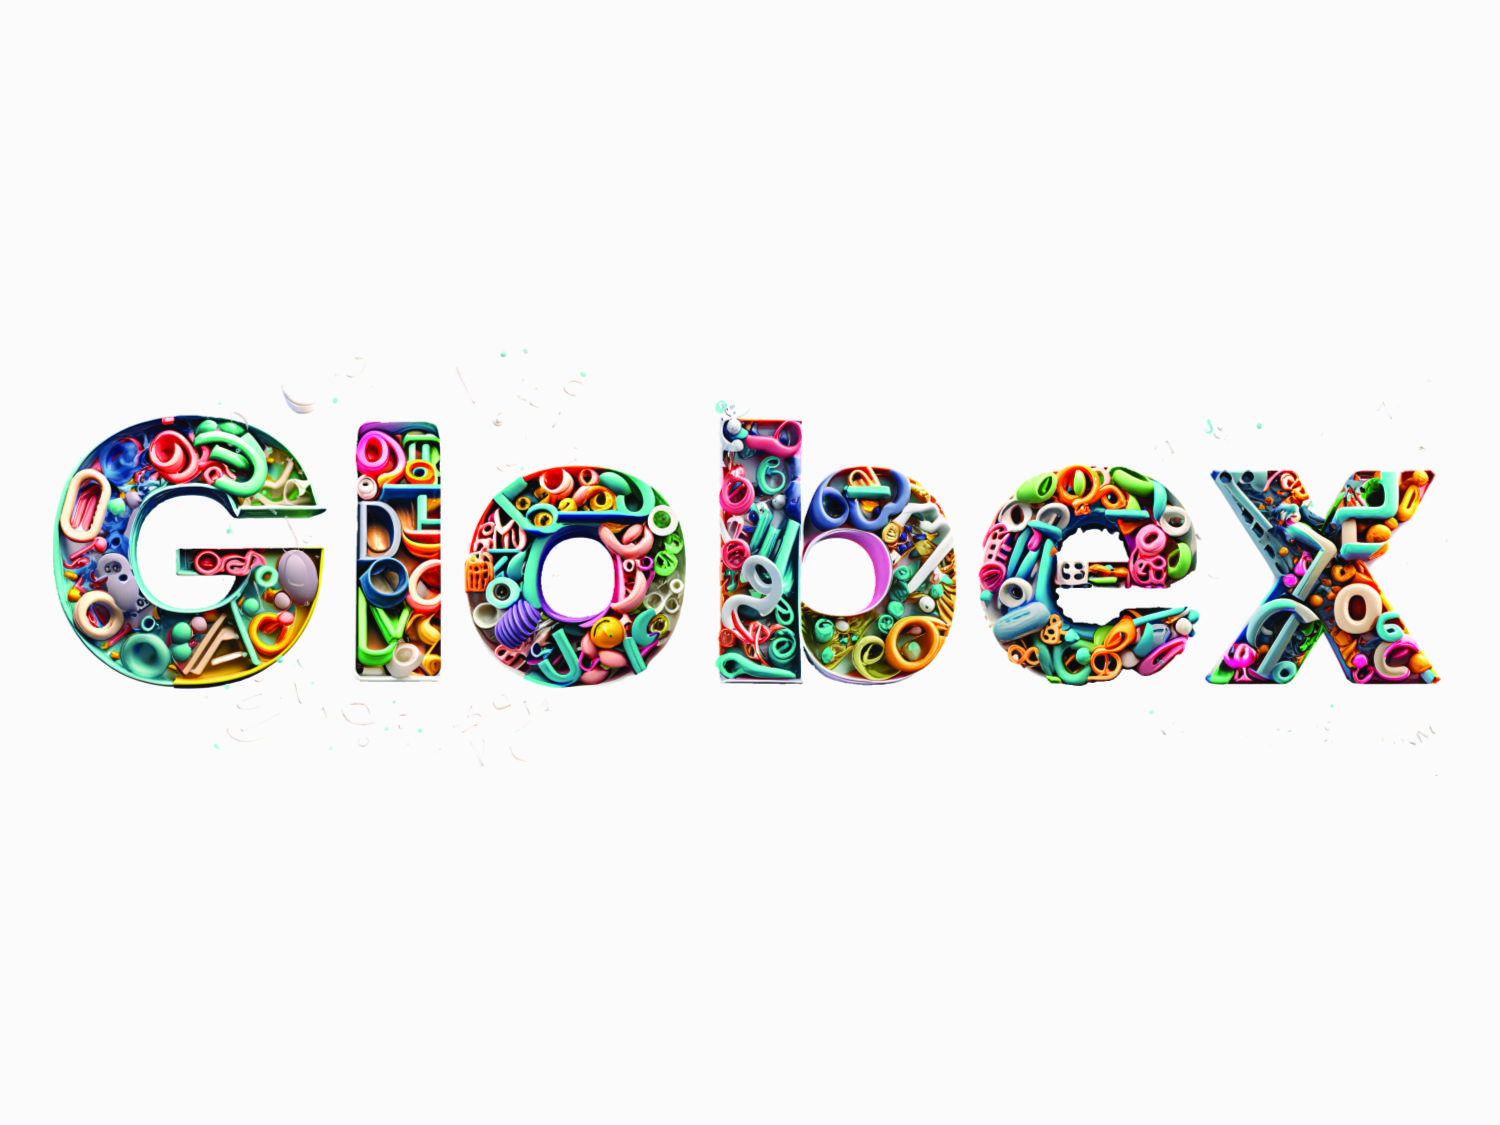 Globex products